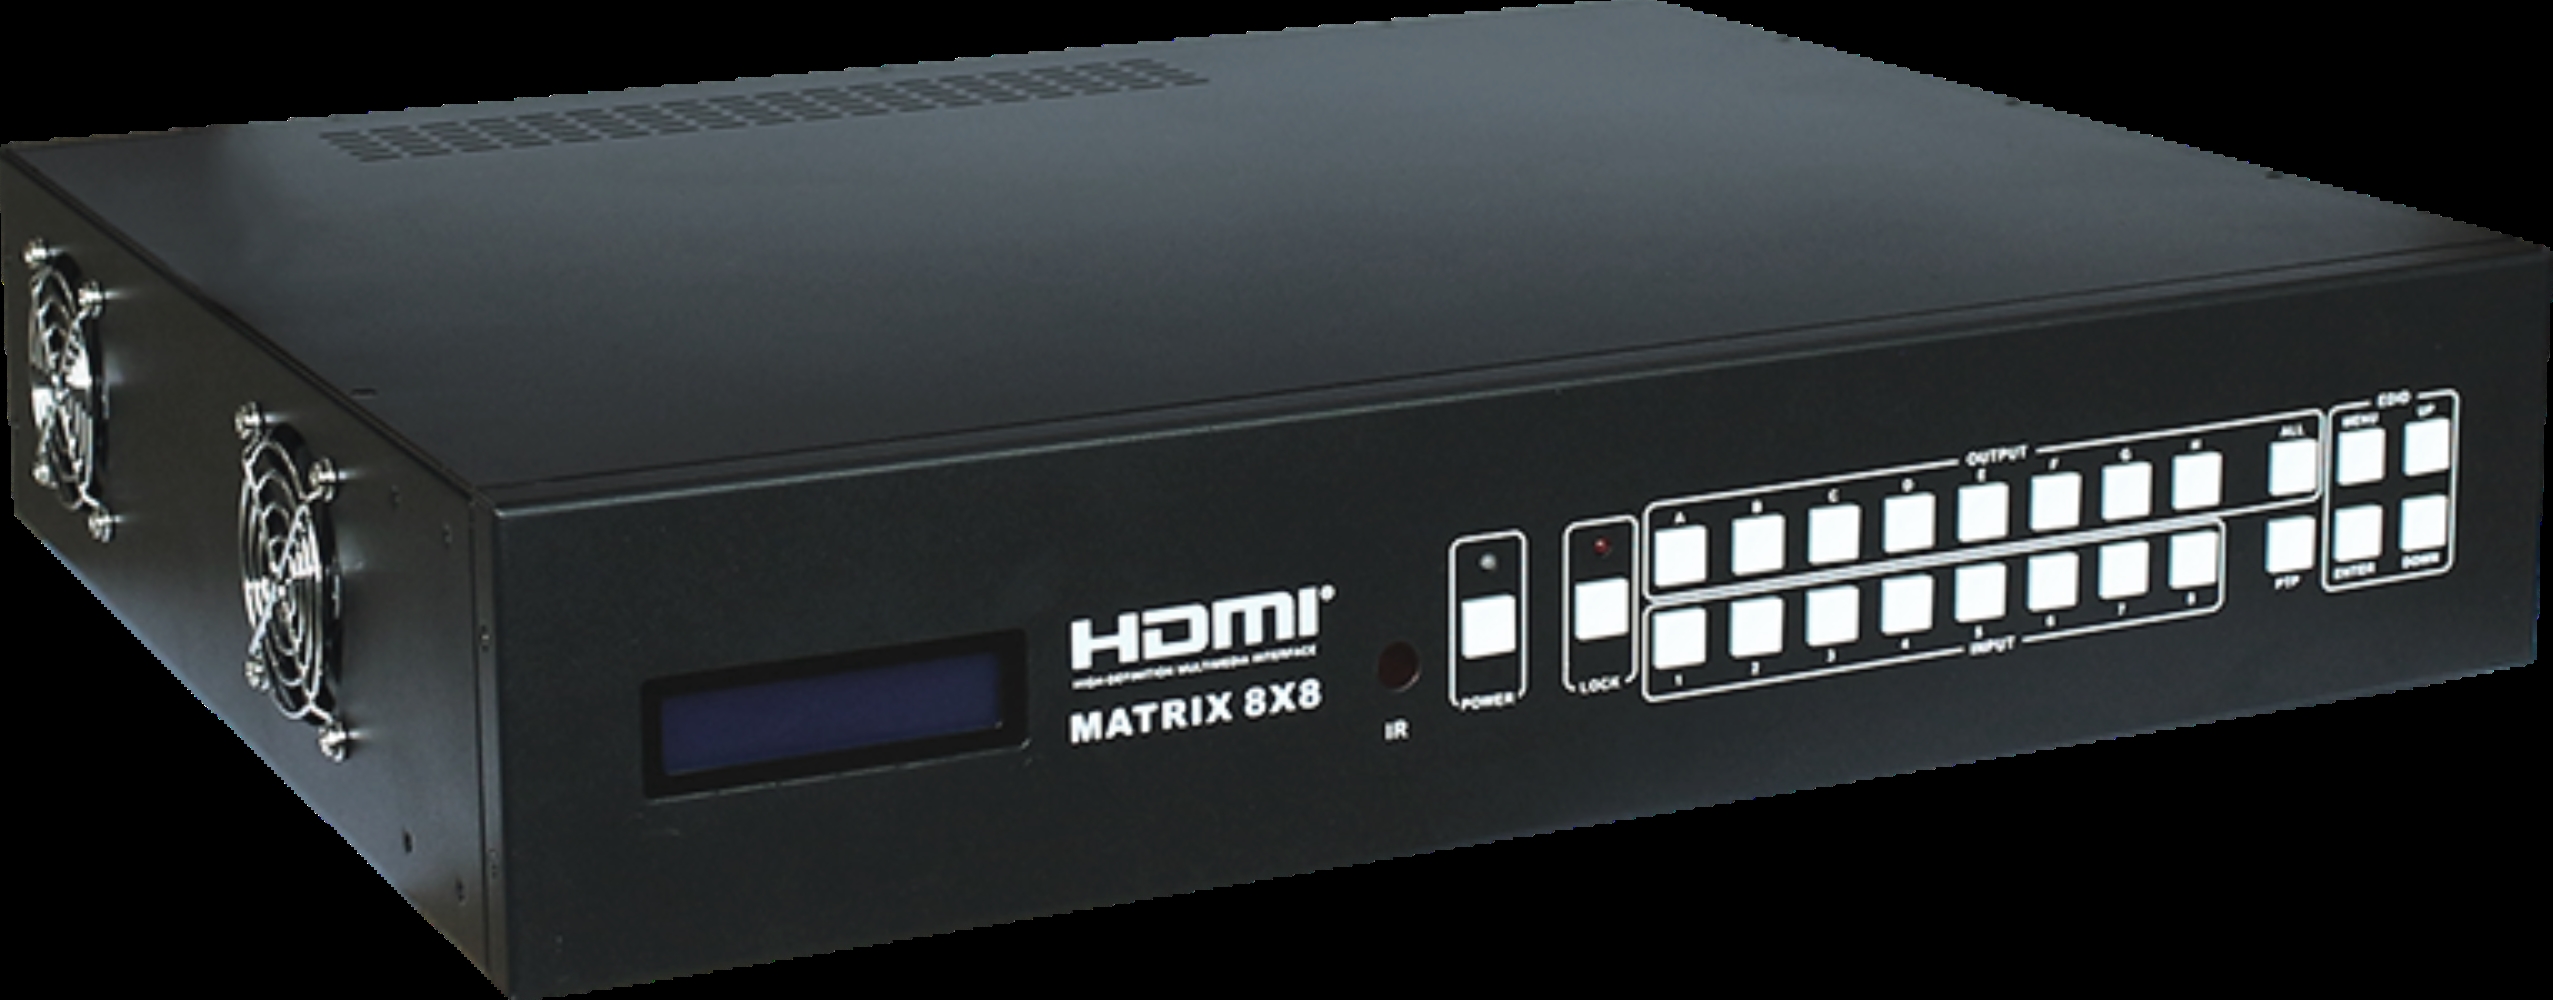 photo of HDMI Matrix